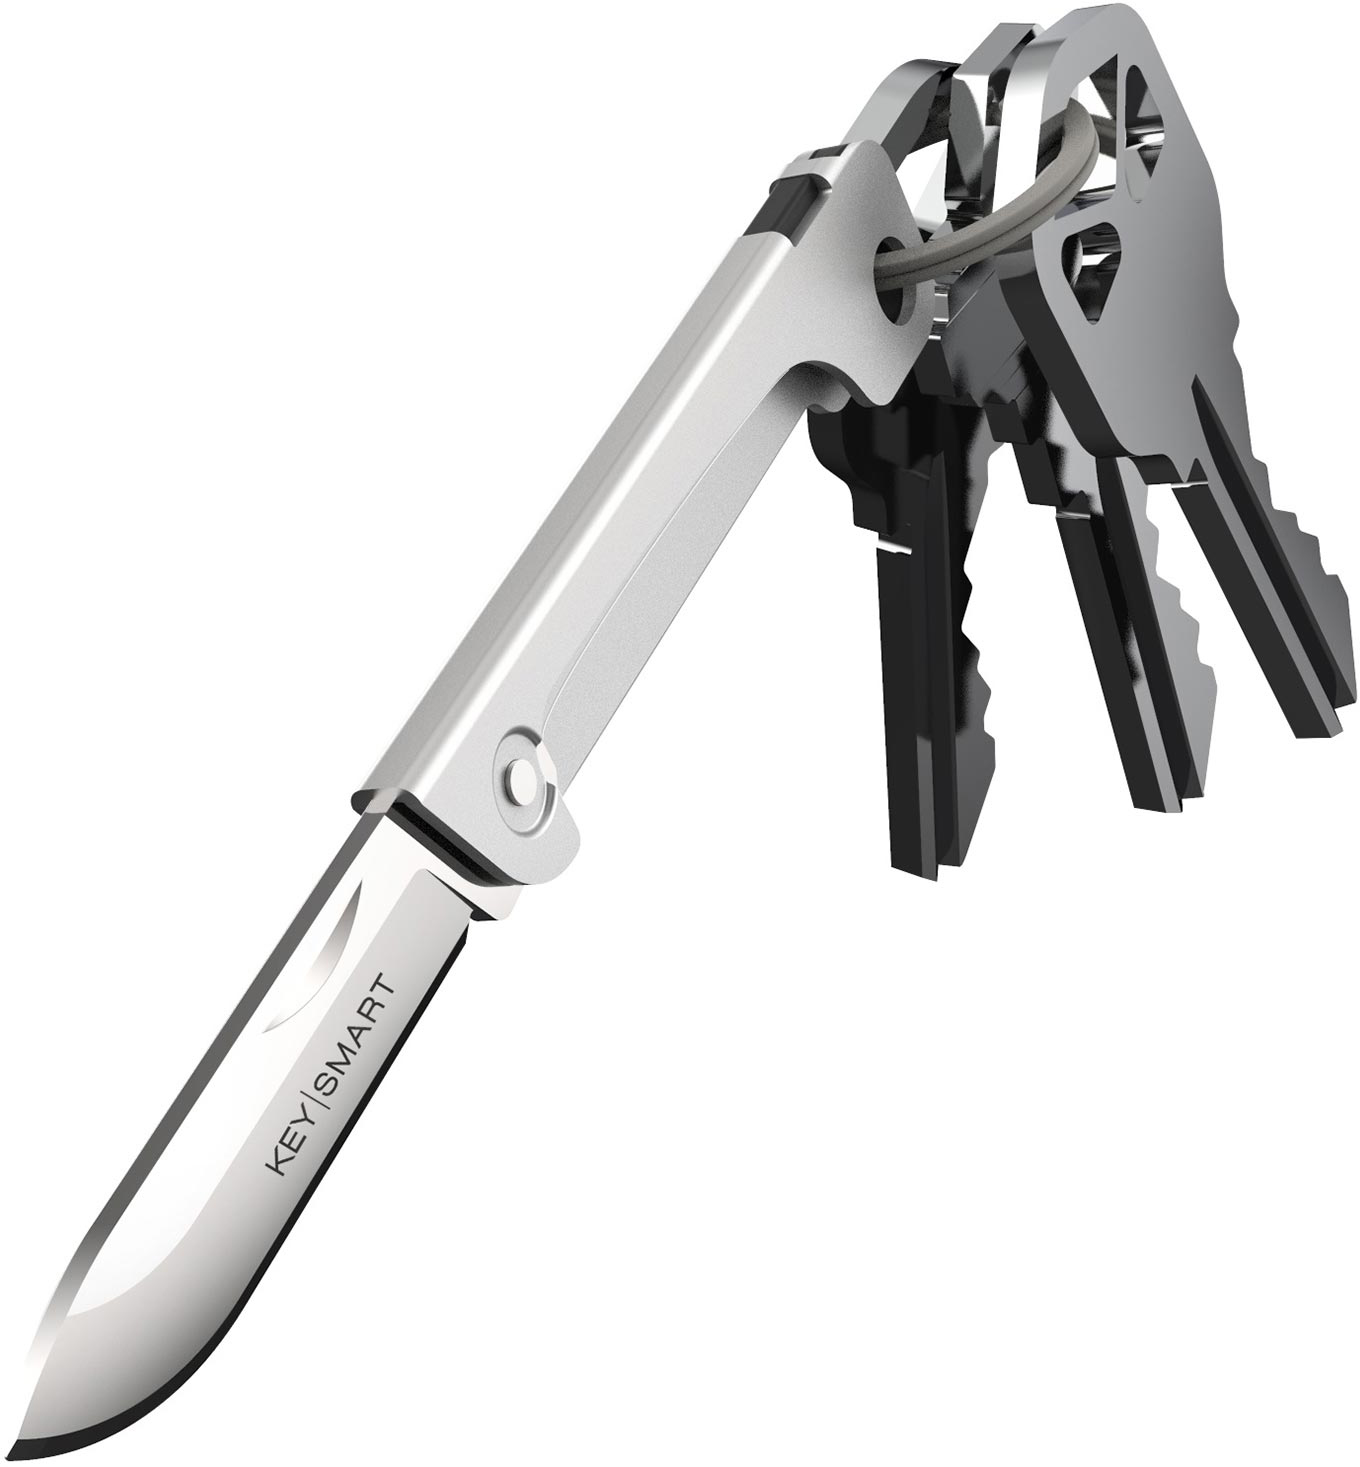 KeySmart Dapper 100, Slim Keychain Gentleman's Knife